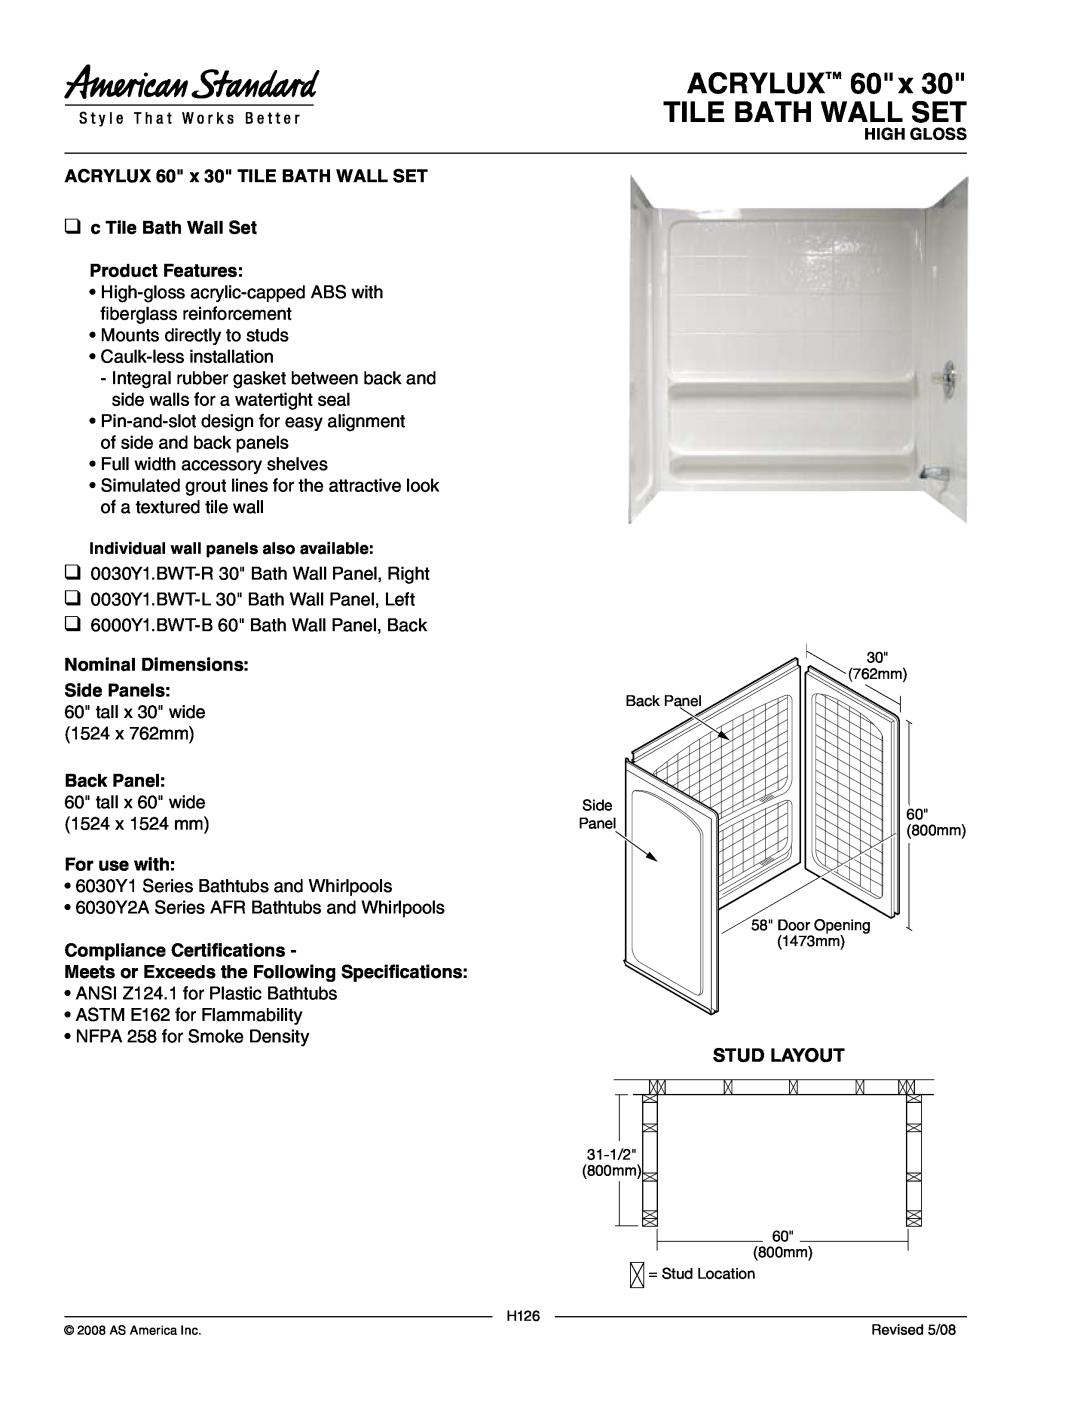 American Standard Acrylux 60"x 30 dimensions ACRYLUX 60 x TILE BATH WALL SET, Stud Layout, Nominal Dimensions, Back Panel 